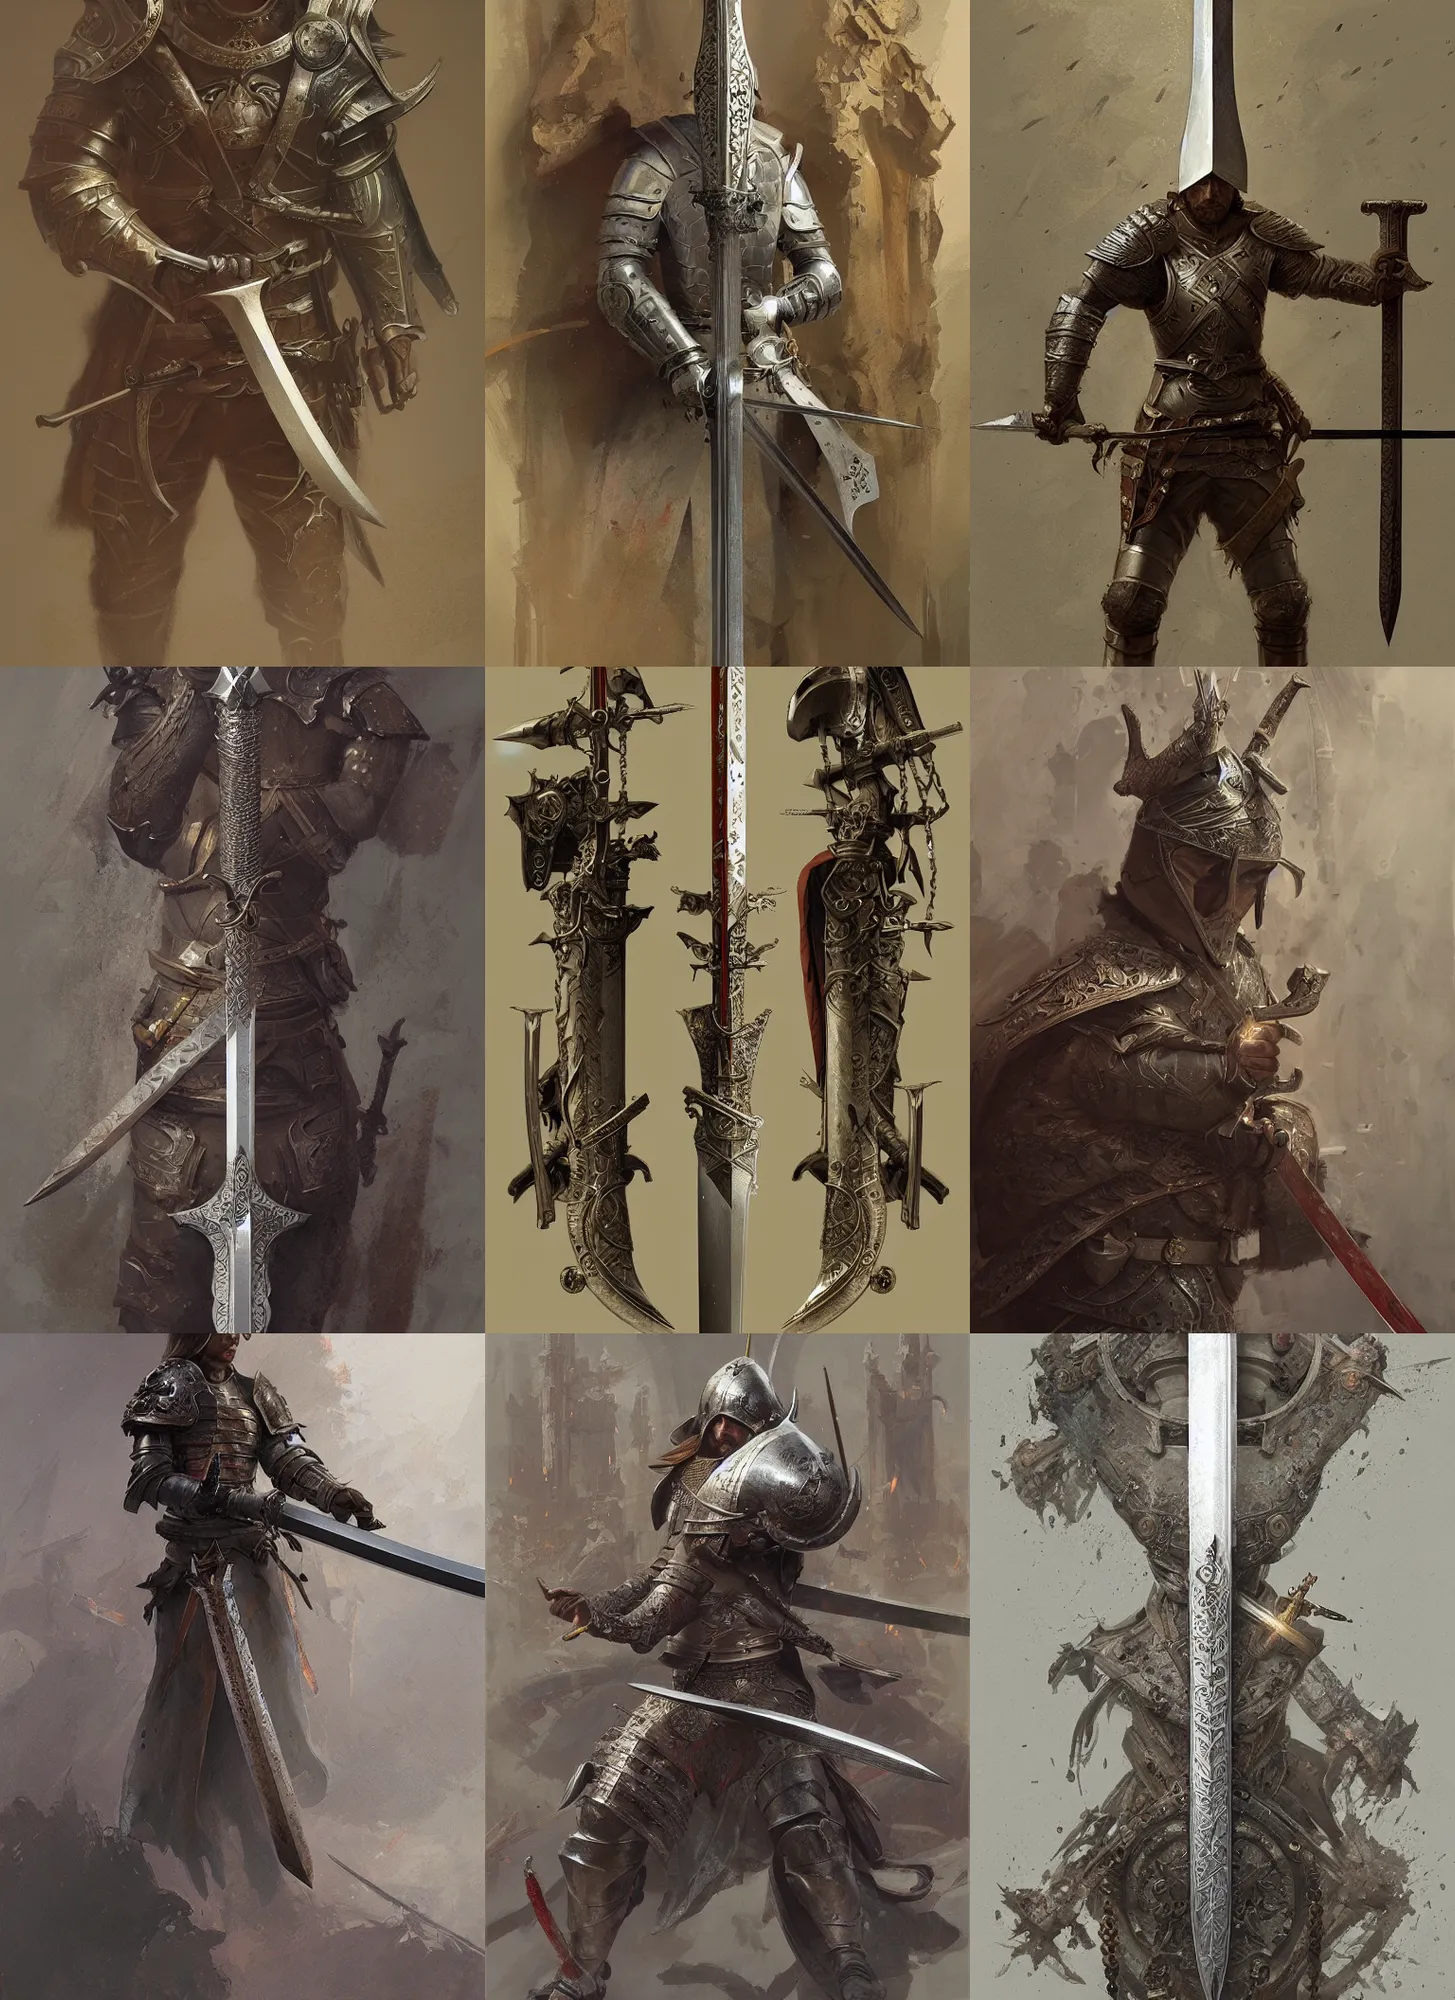 Prompt: medieval sword in weapons room, intricate, highly detailed, smooth, artstation, digital illustration, ruan jia, mandy jurgens, rutkowski